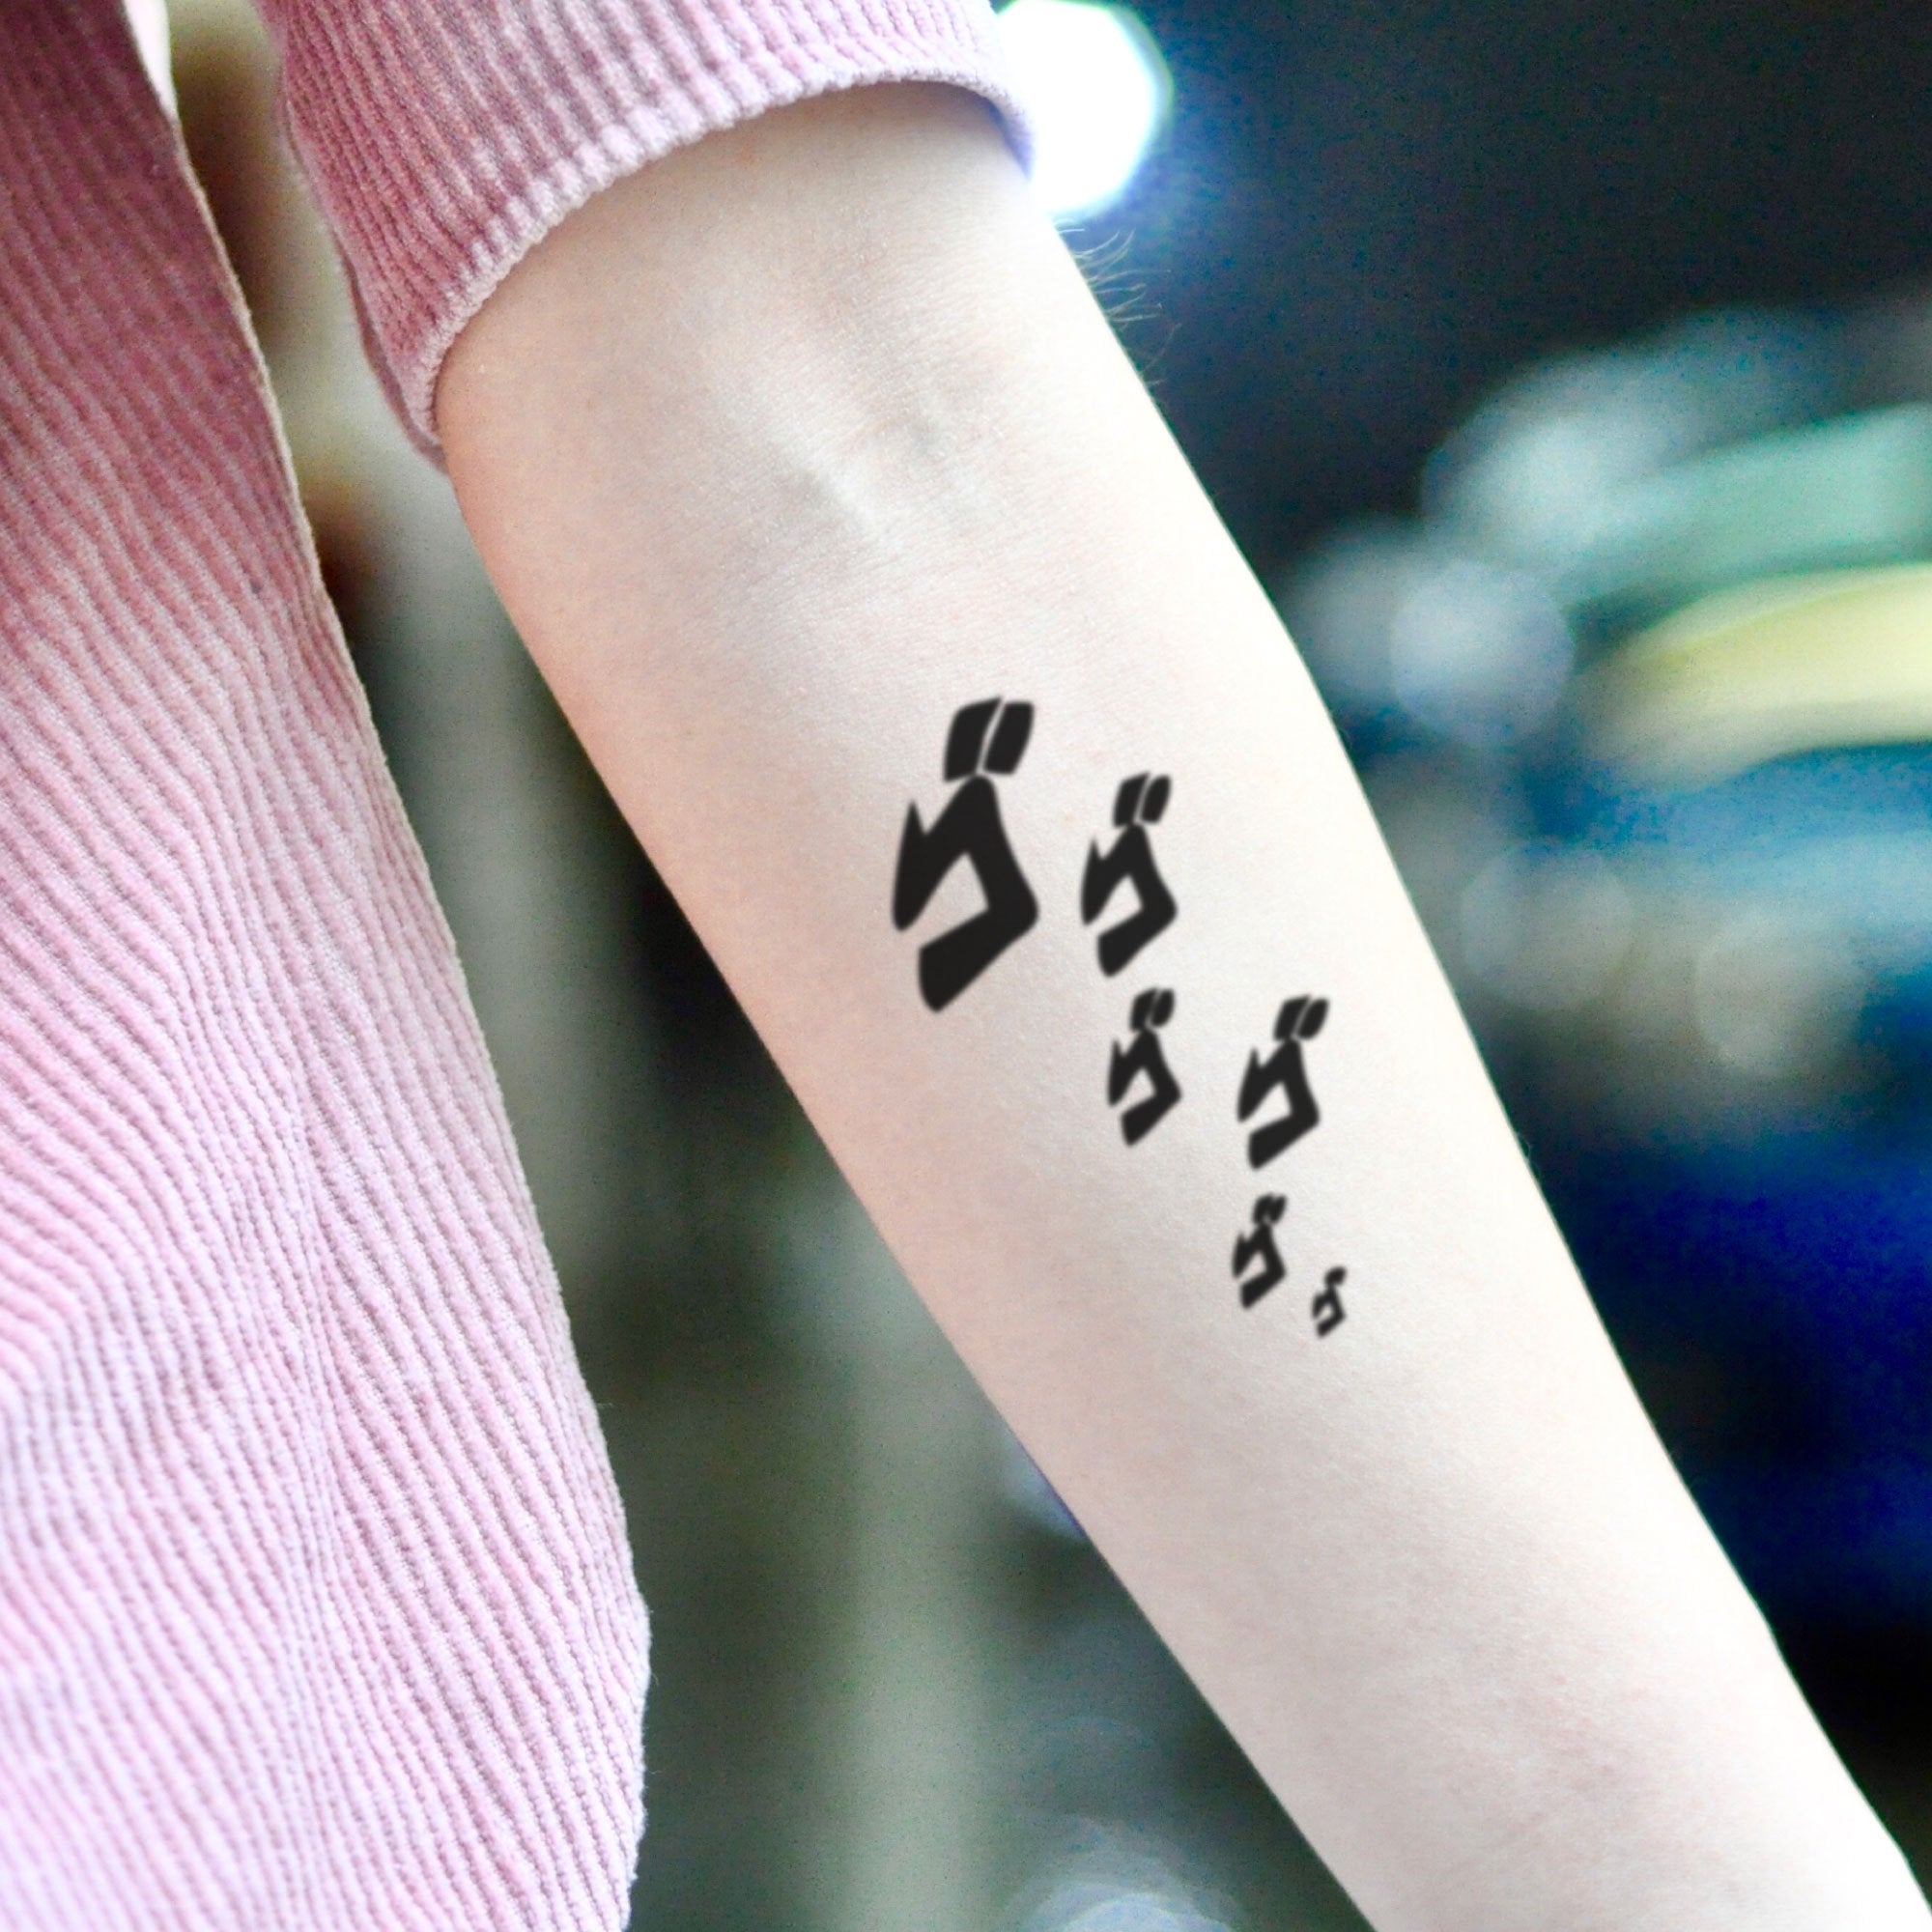 JJBA MENACING ゴゴゴ Jojo's Bizarre Adventure Temporary Tattoo Sticker